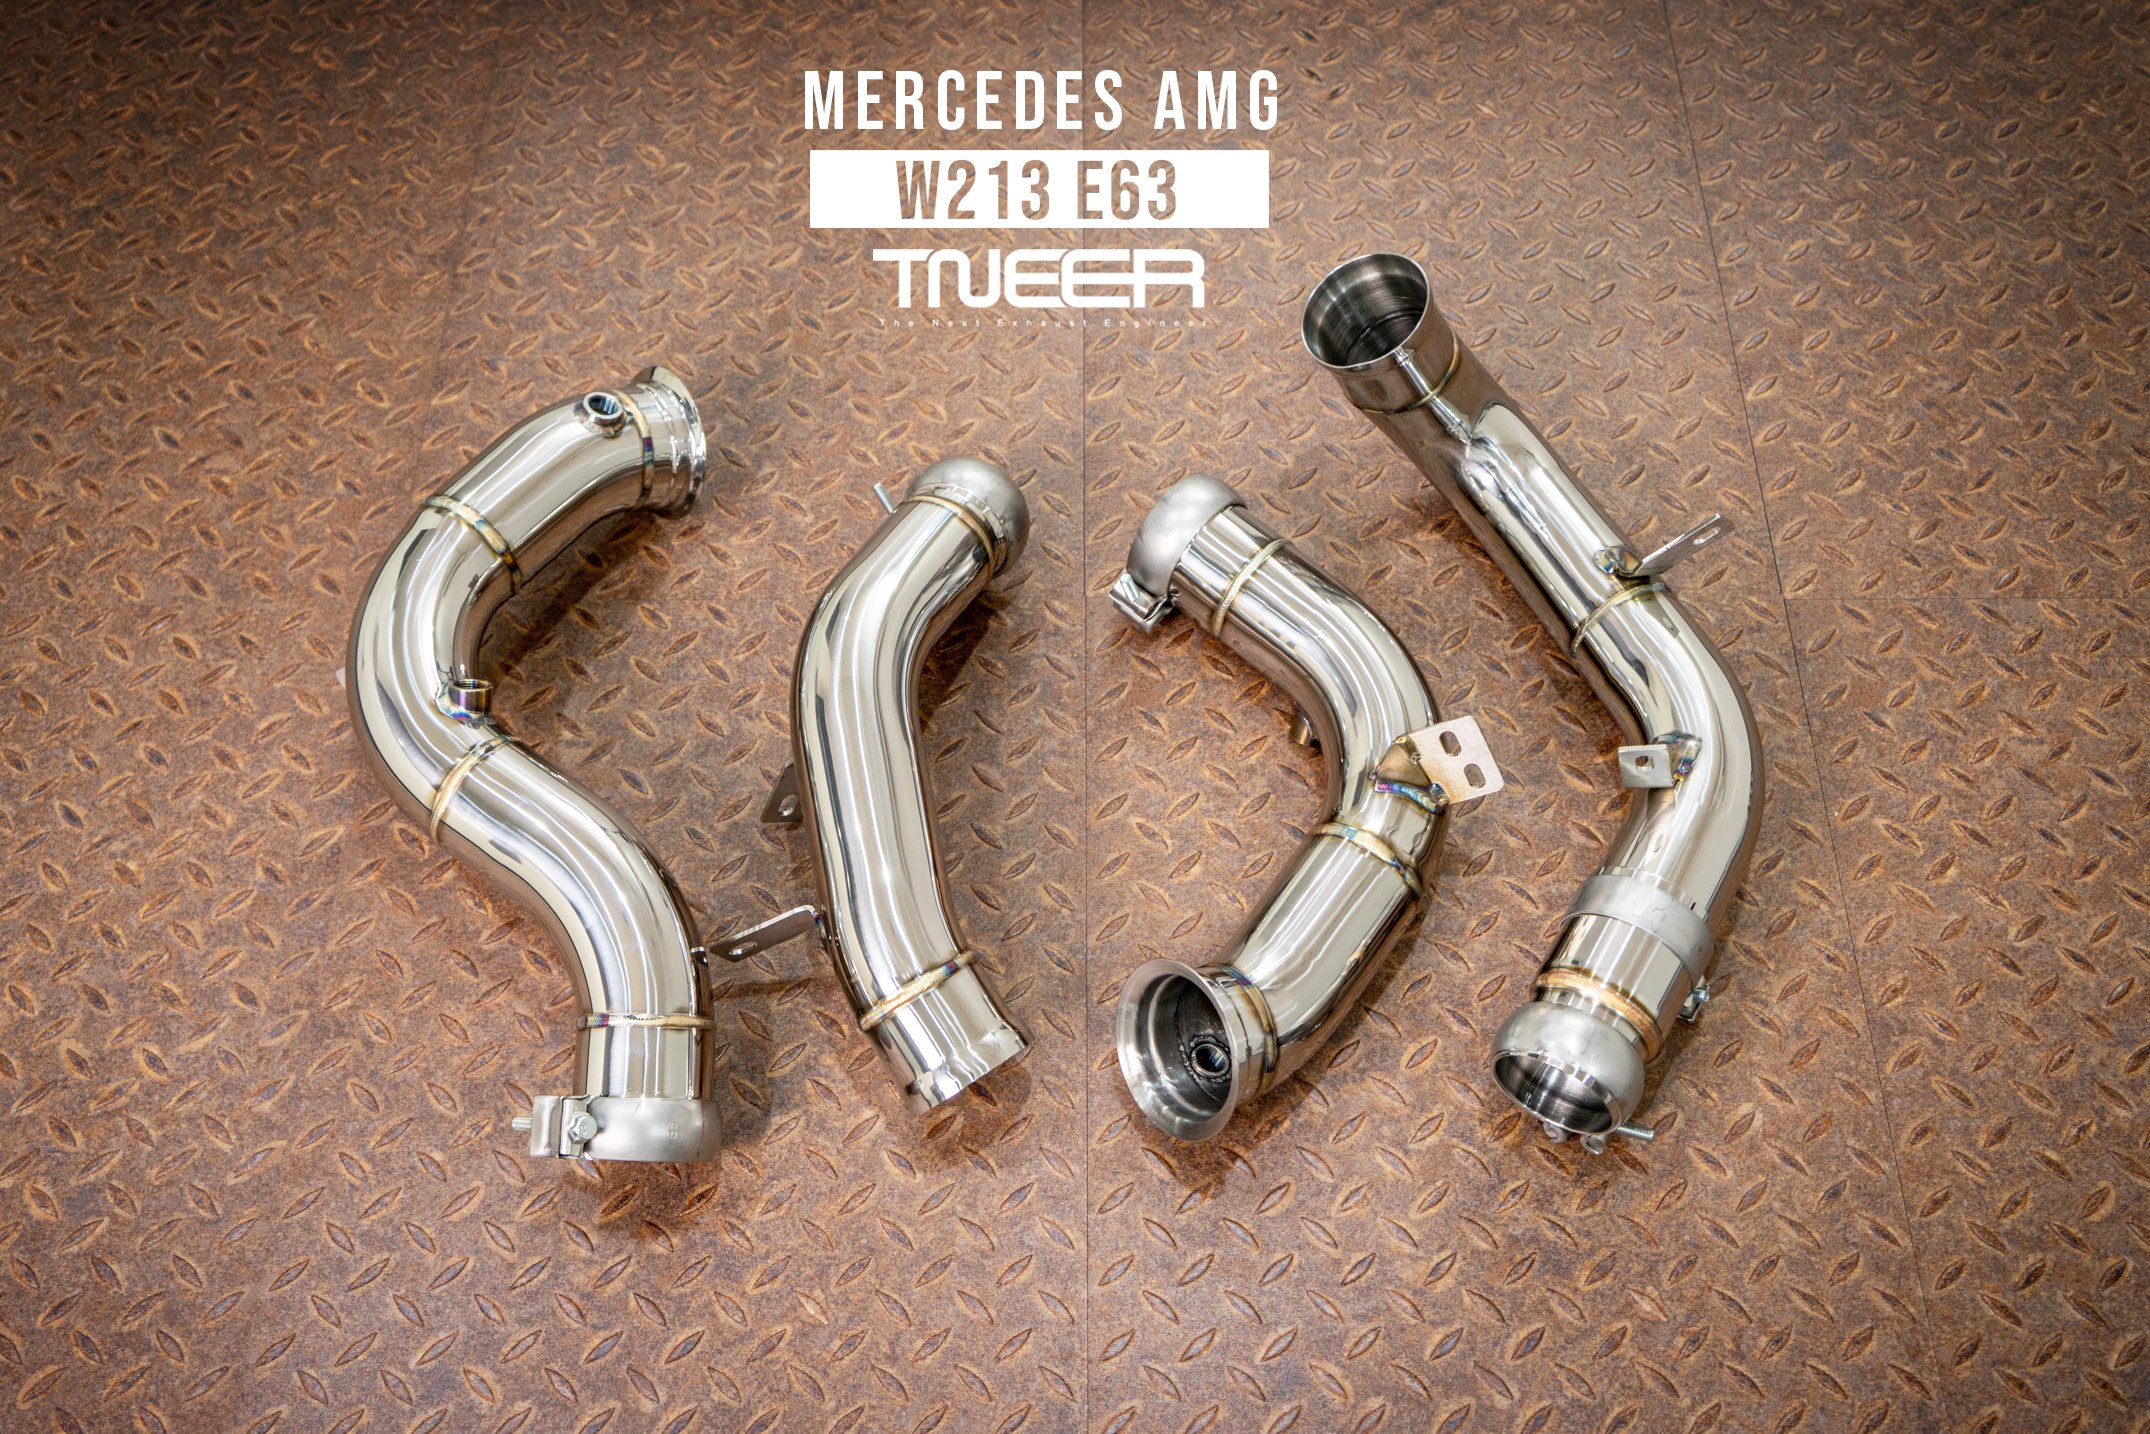 Mercedes-AMG W213 E63 TNEER High-Performance Downpipes